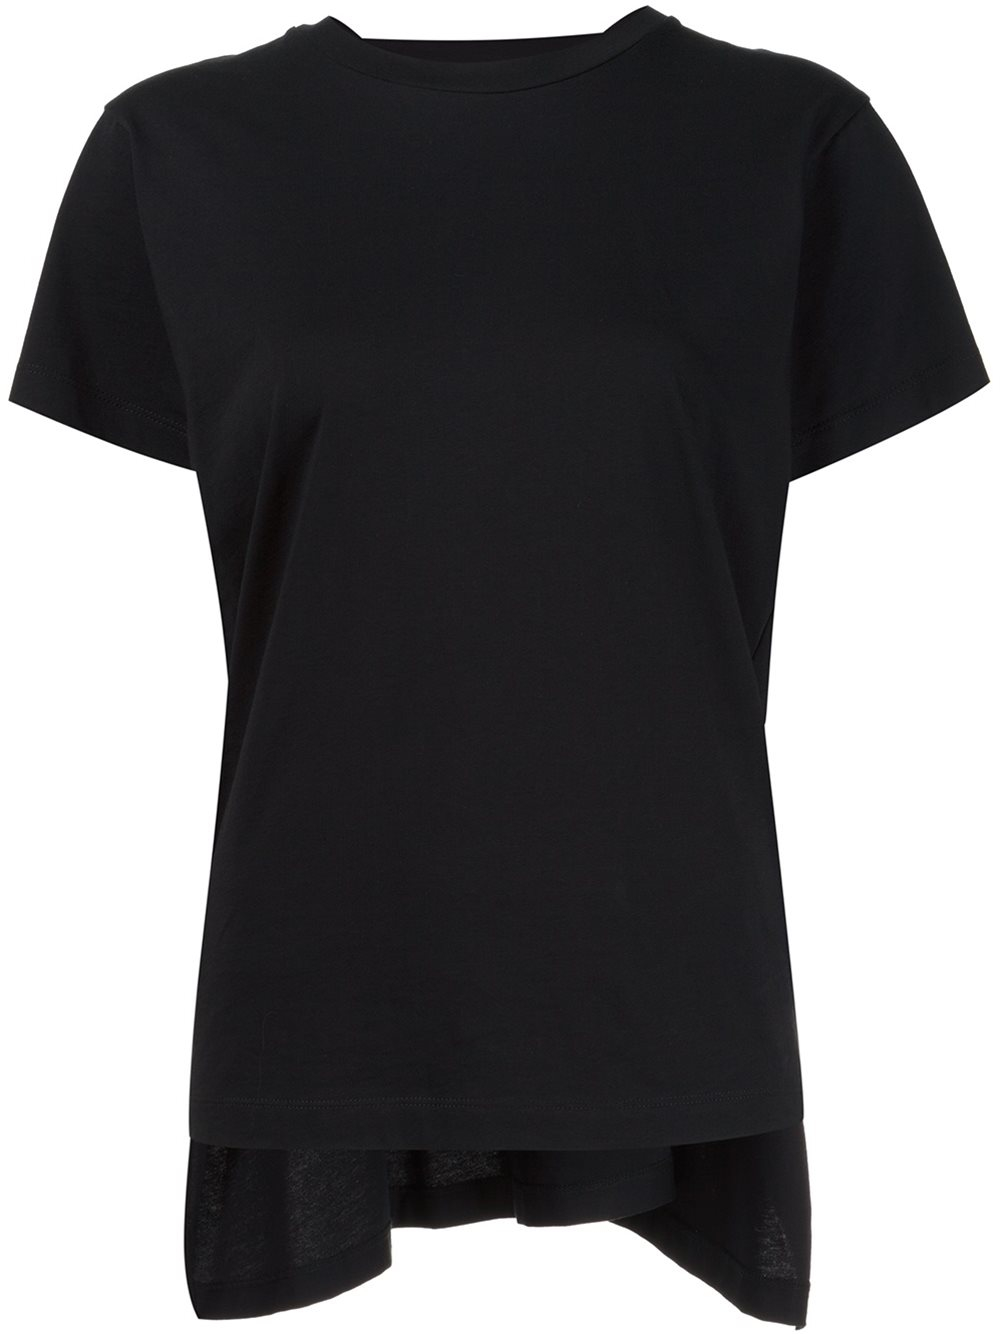 Mm6 by maison martin margiela Draped Back T-shirt in Black | Lyst